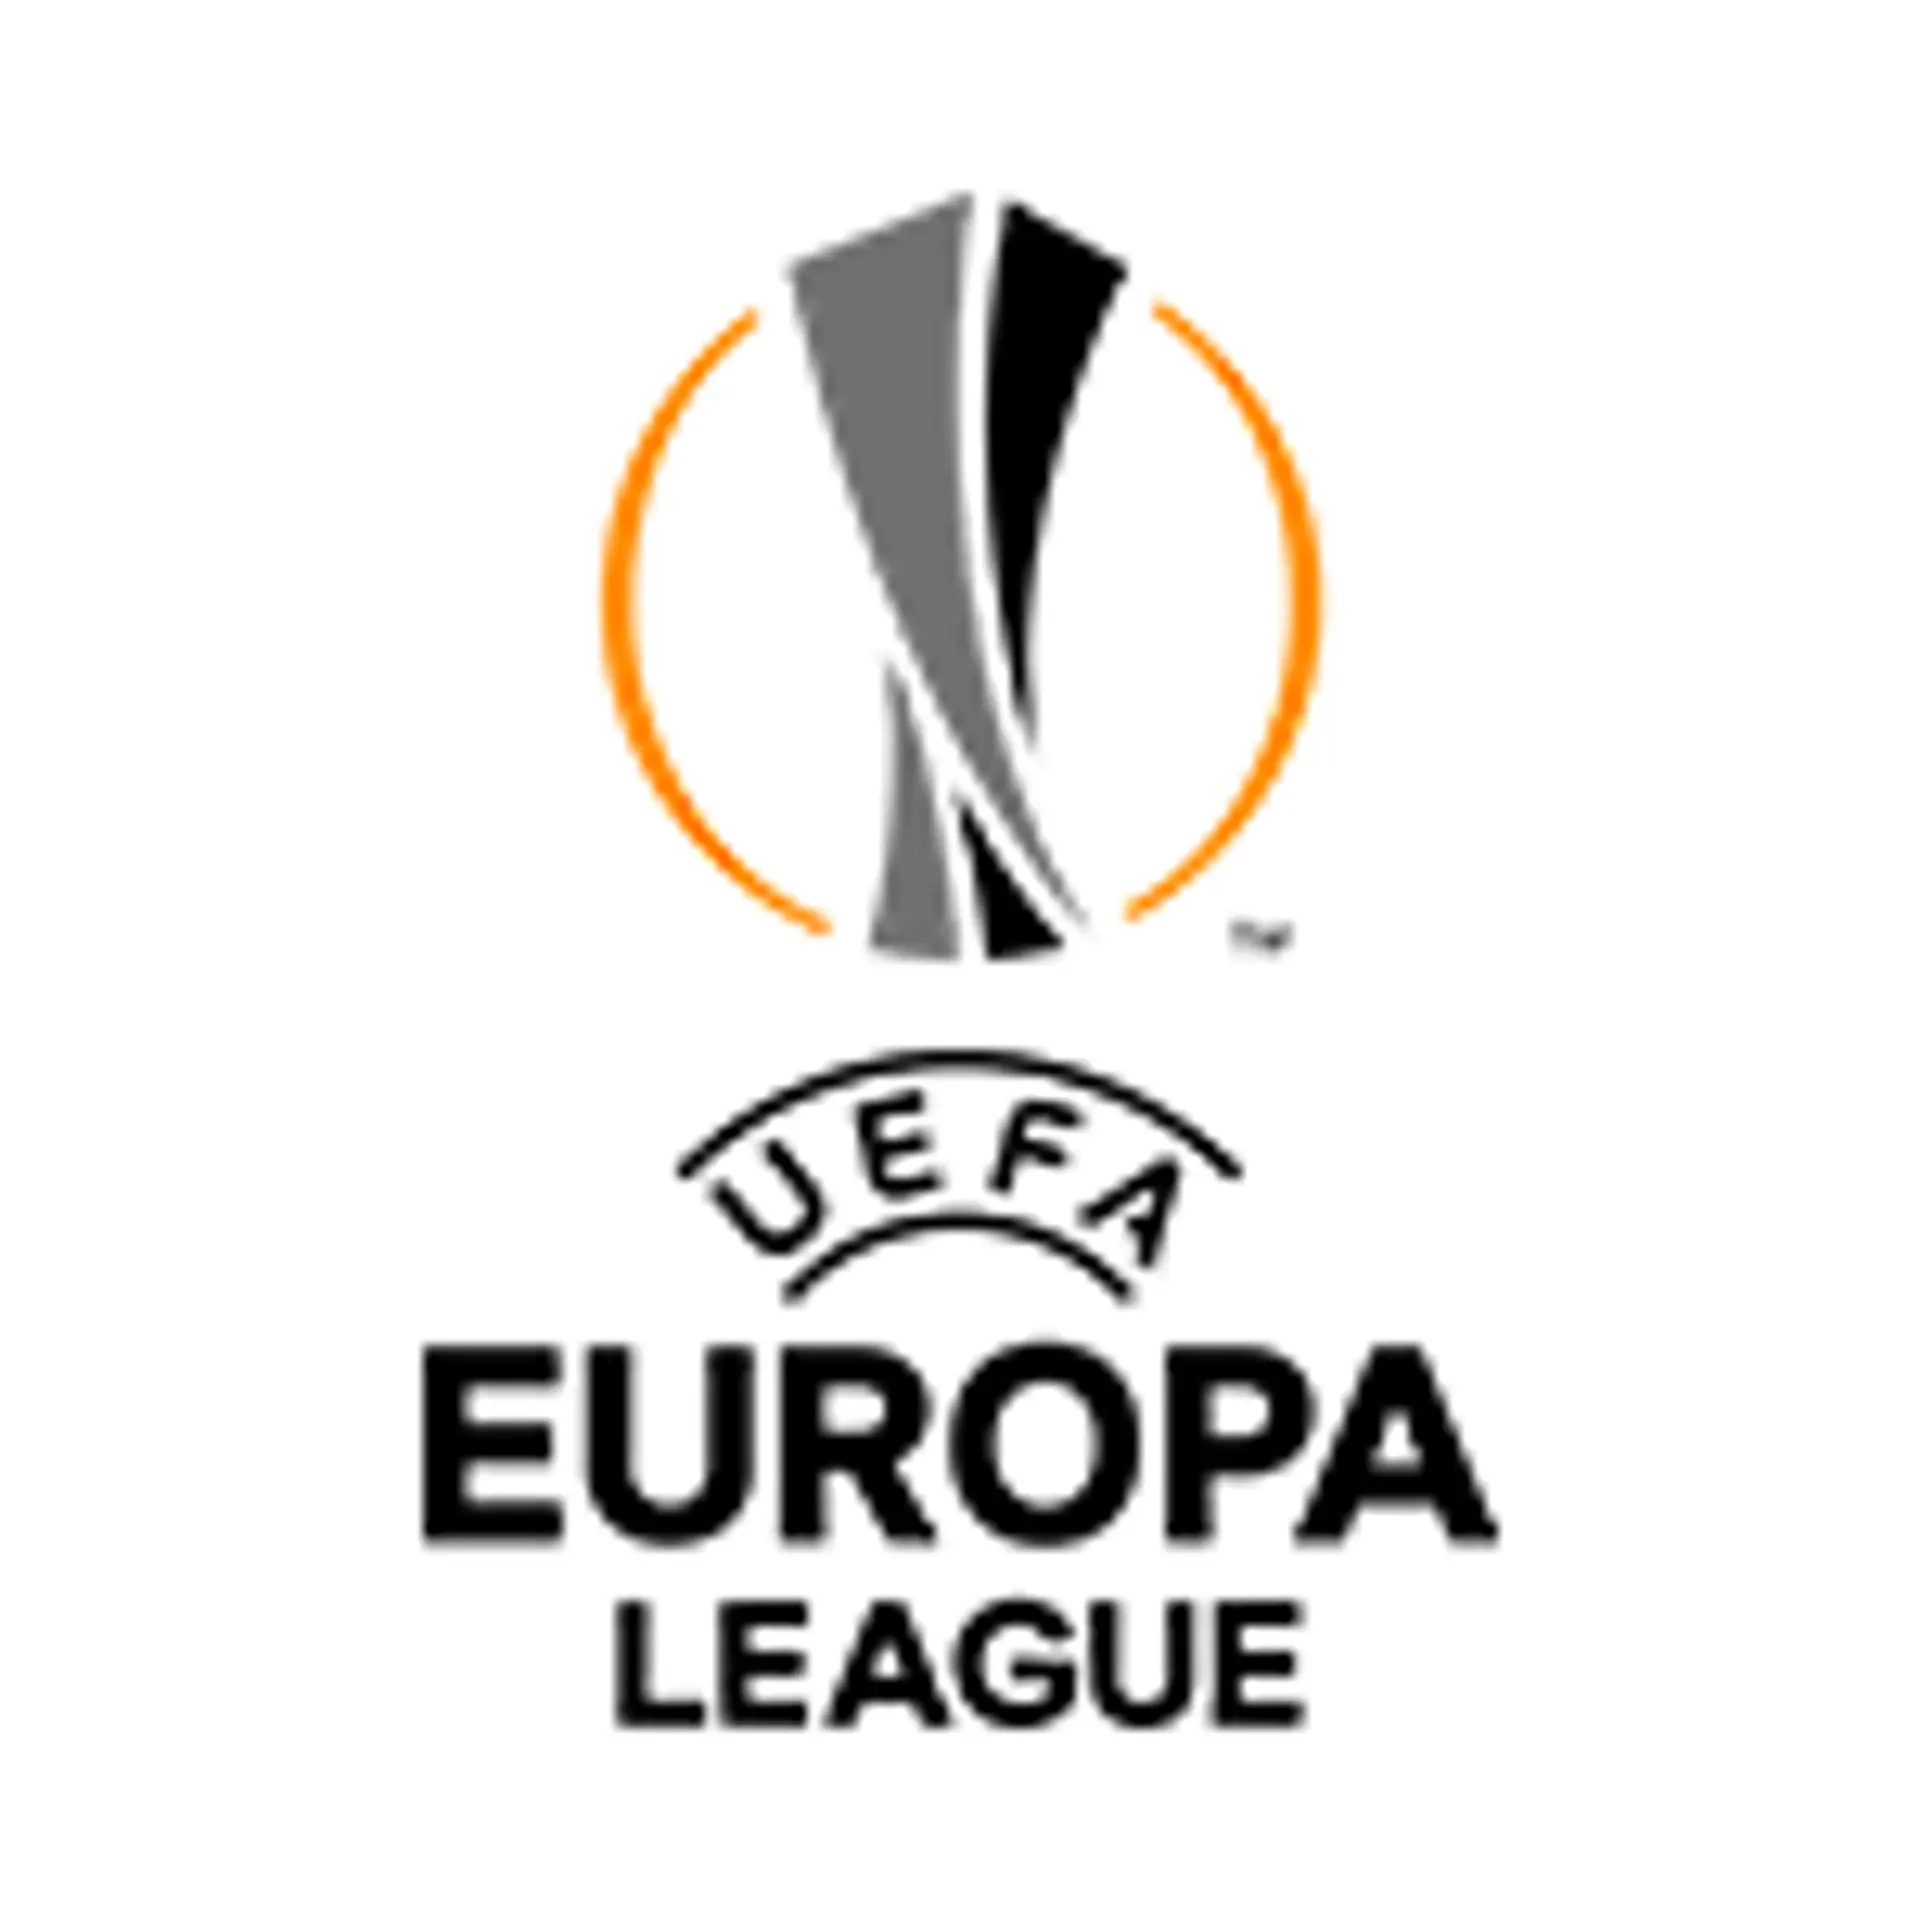 UEFA Europa League Teams